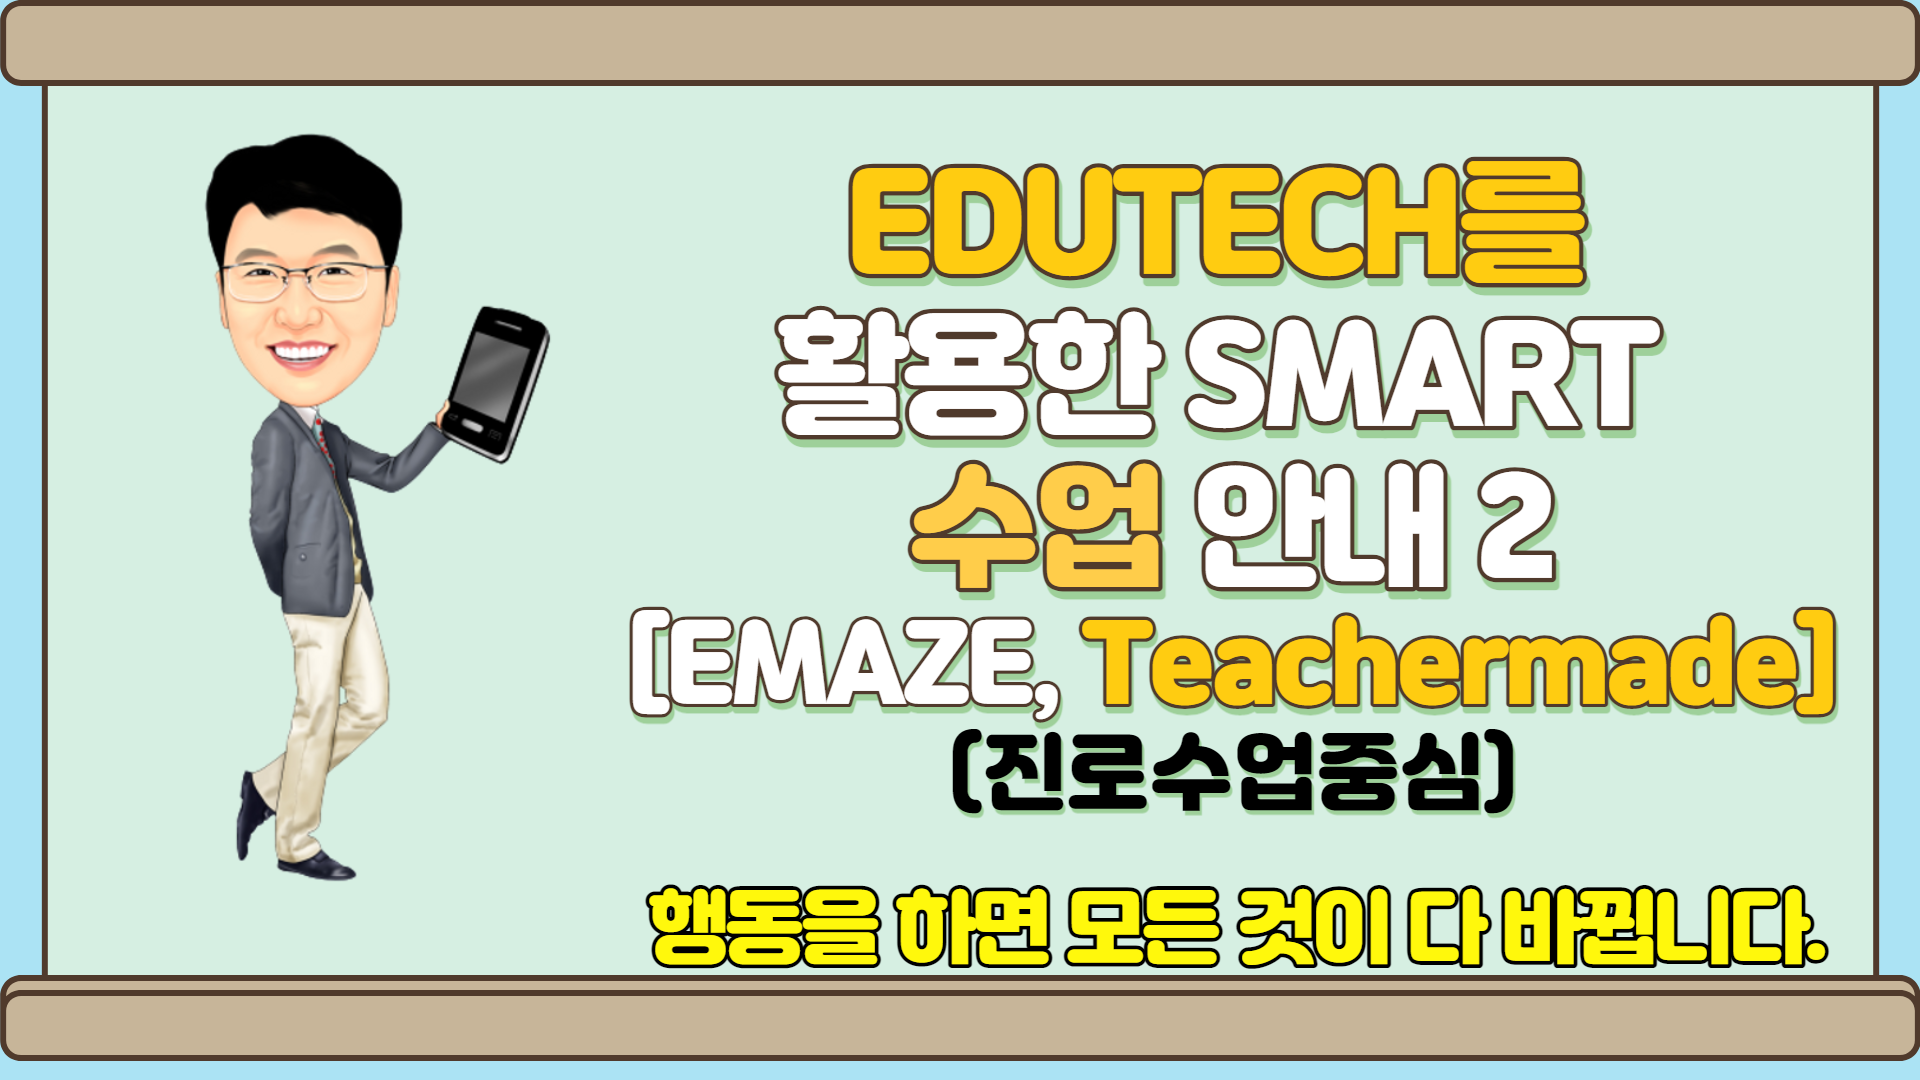 EDUTECH를 활용한 smart 수업 방법 안내 2(1기)(진로수업을 중심으로) (GATHET TOWN, Emaze)  13:00-14:50